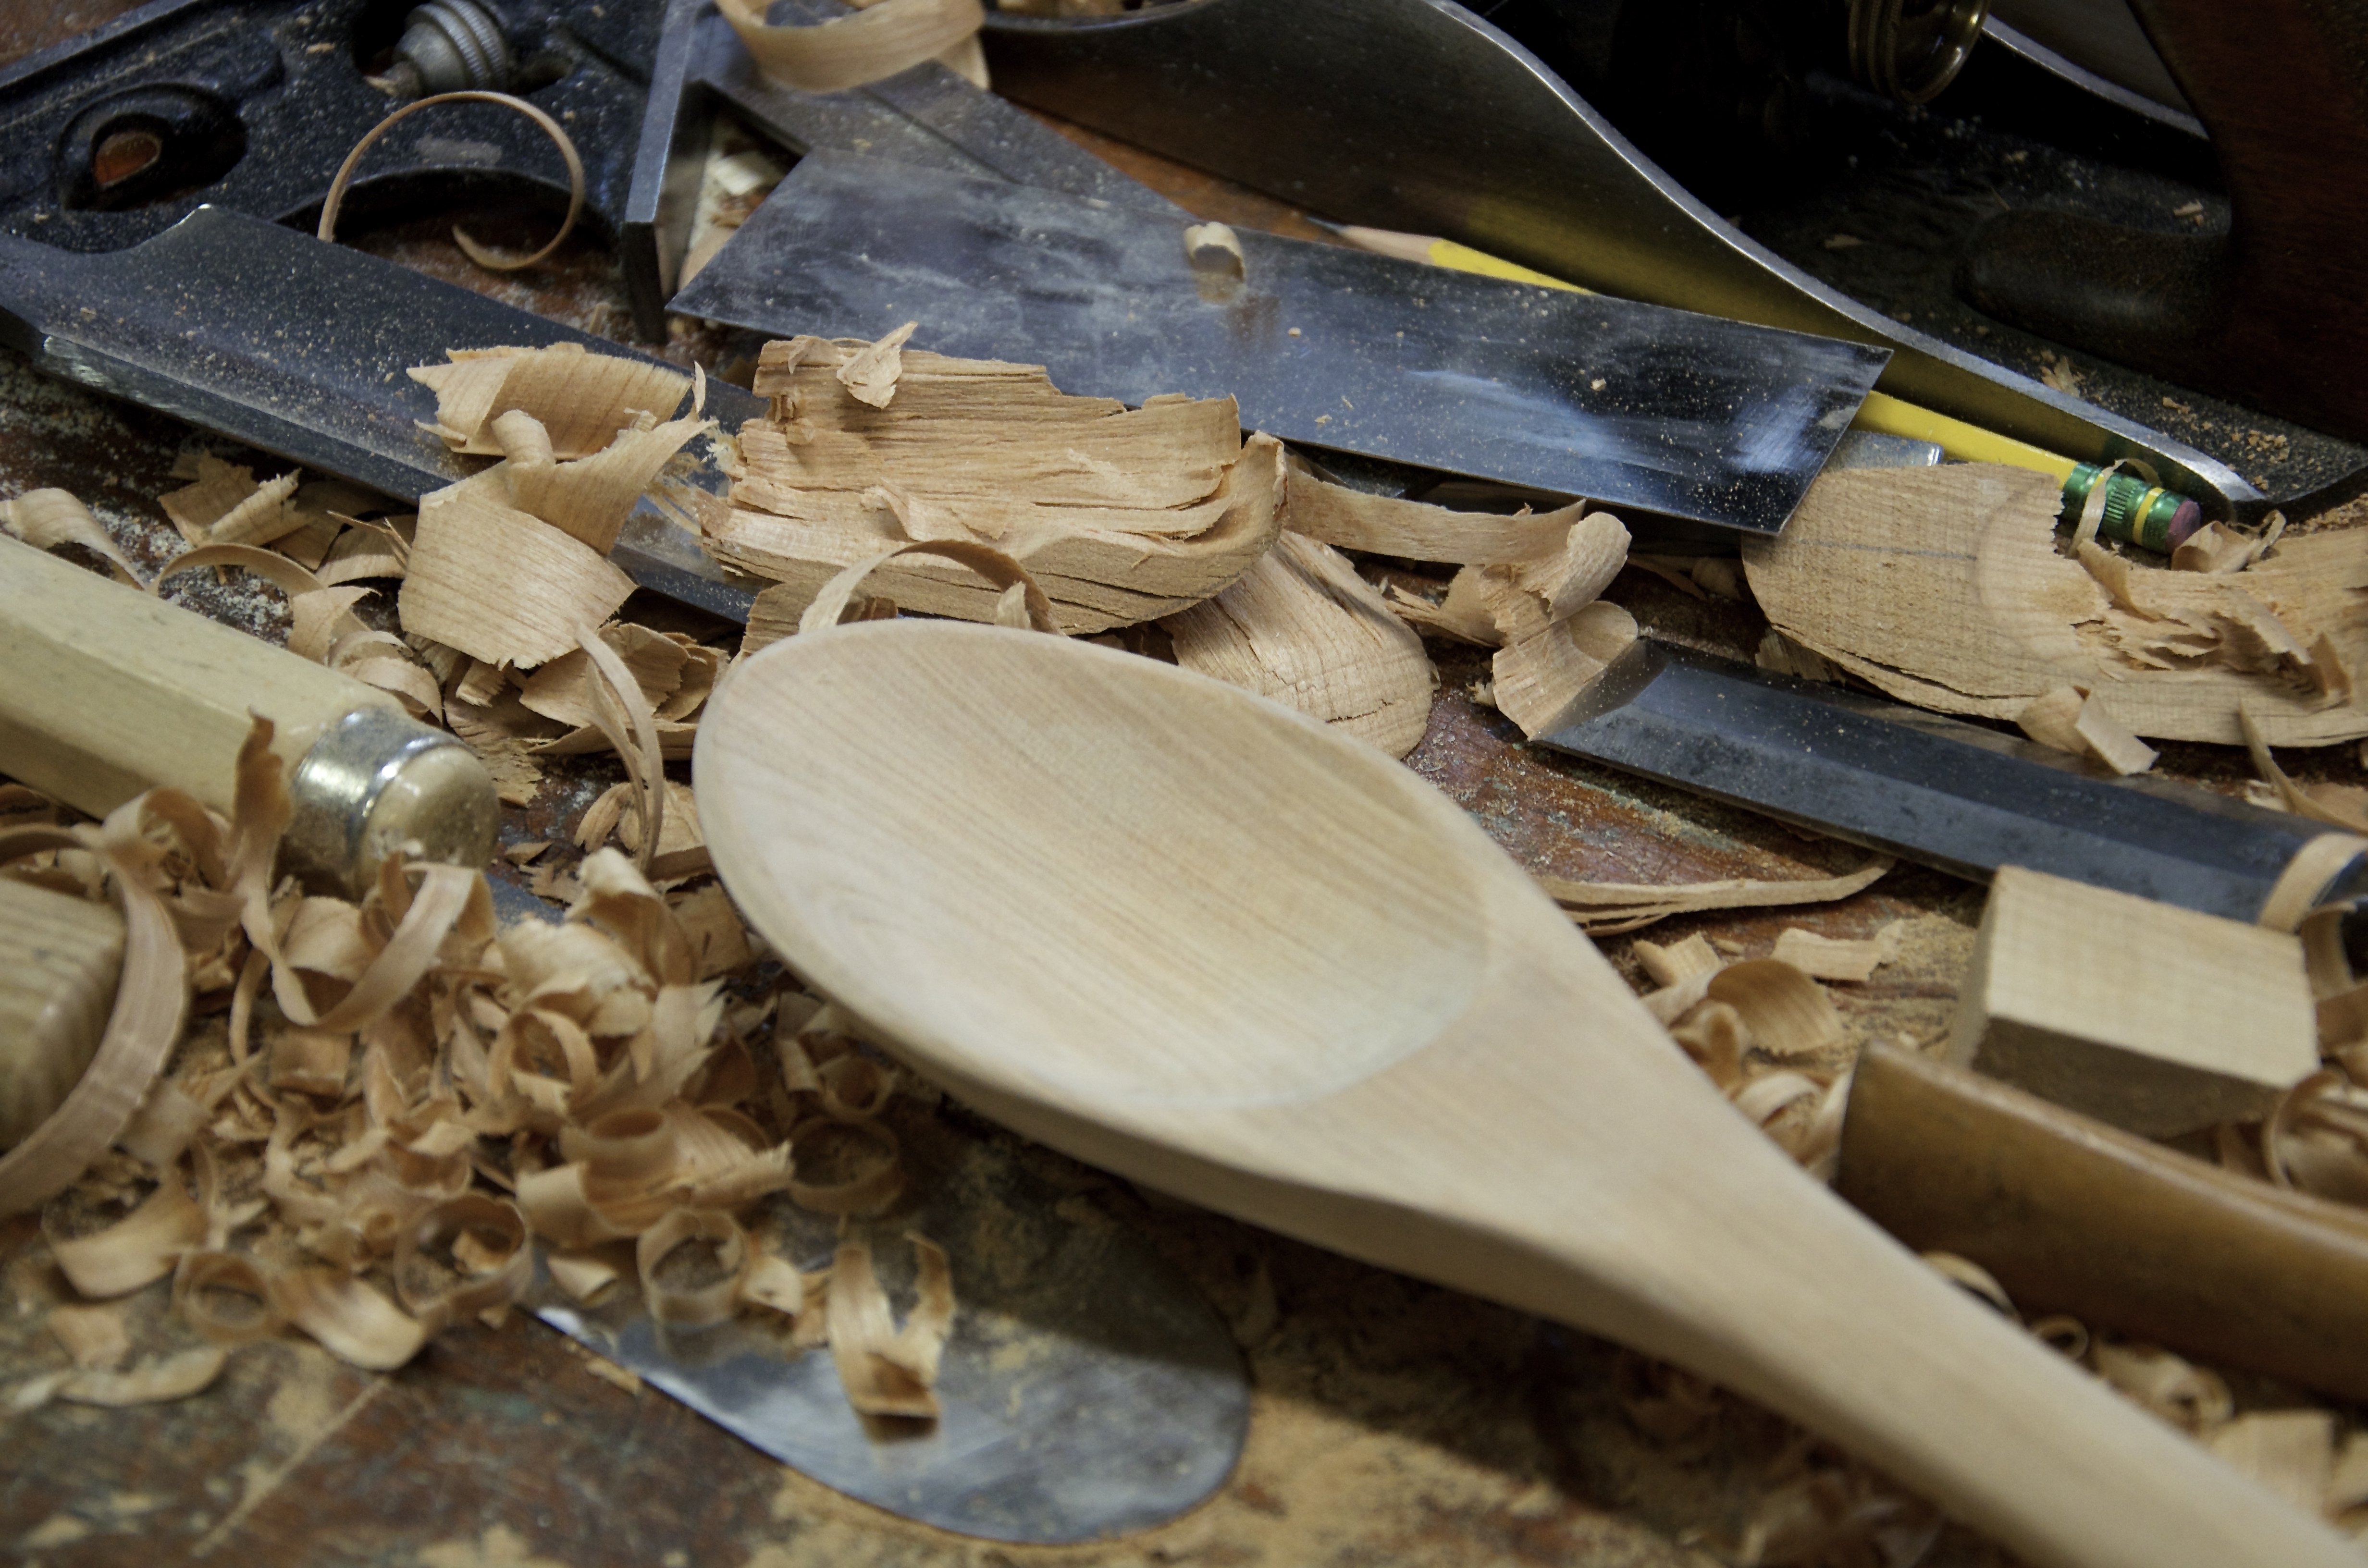 Carving tools I use for oak furniture